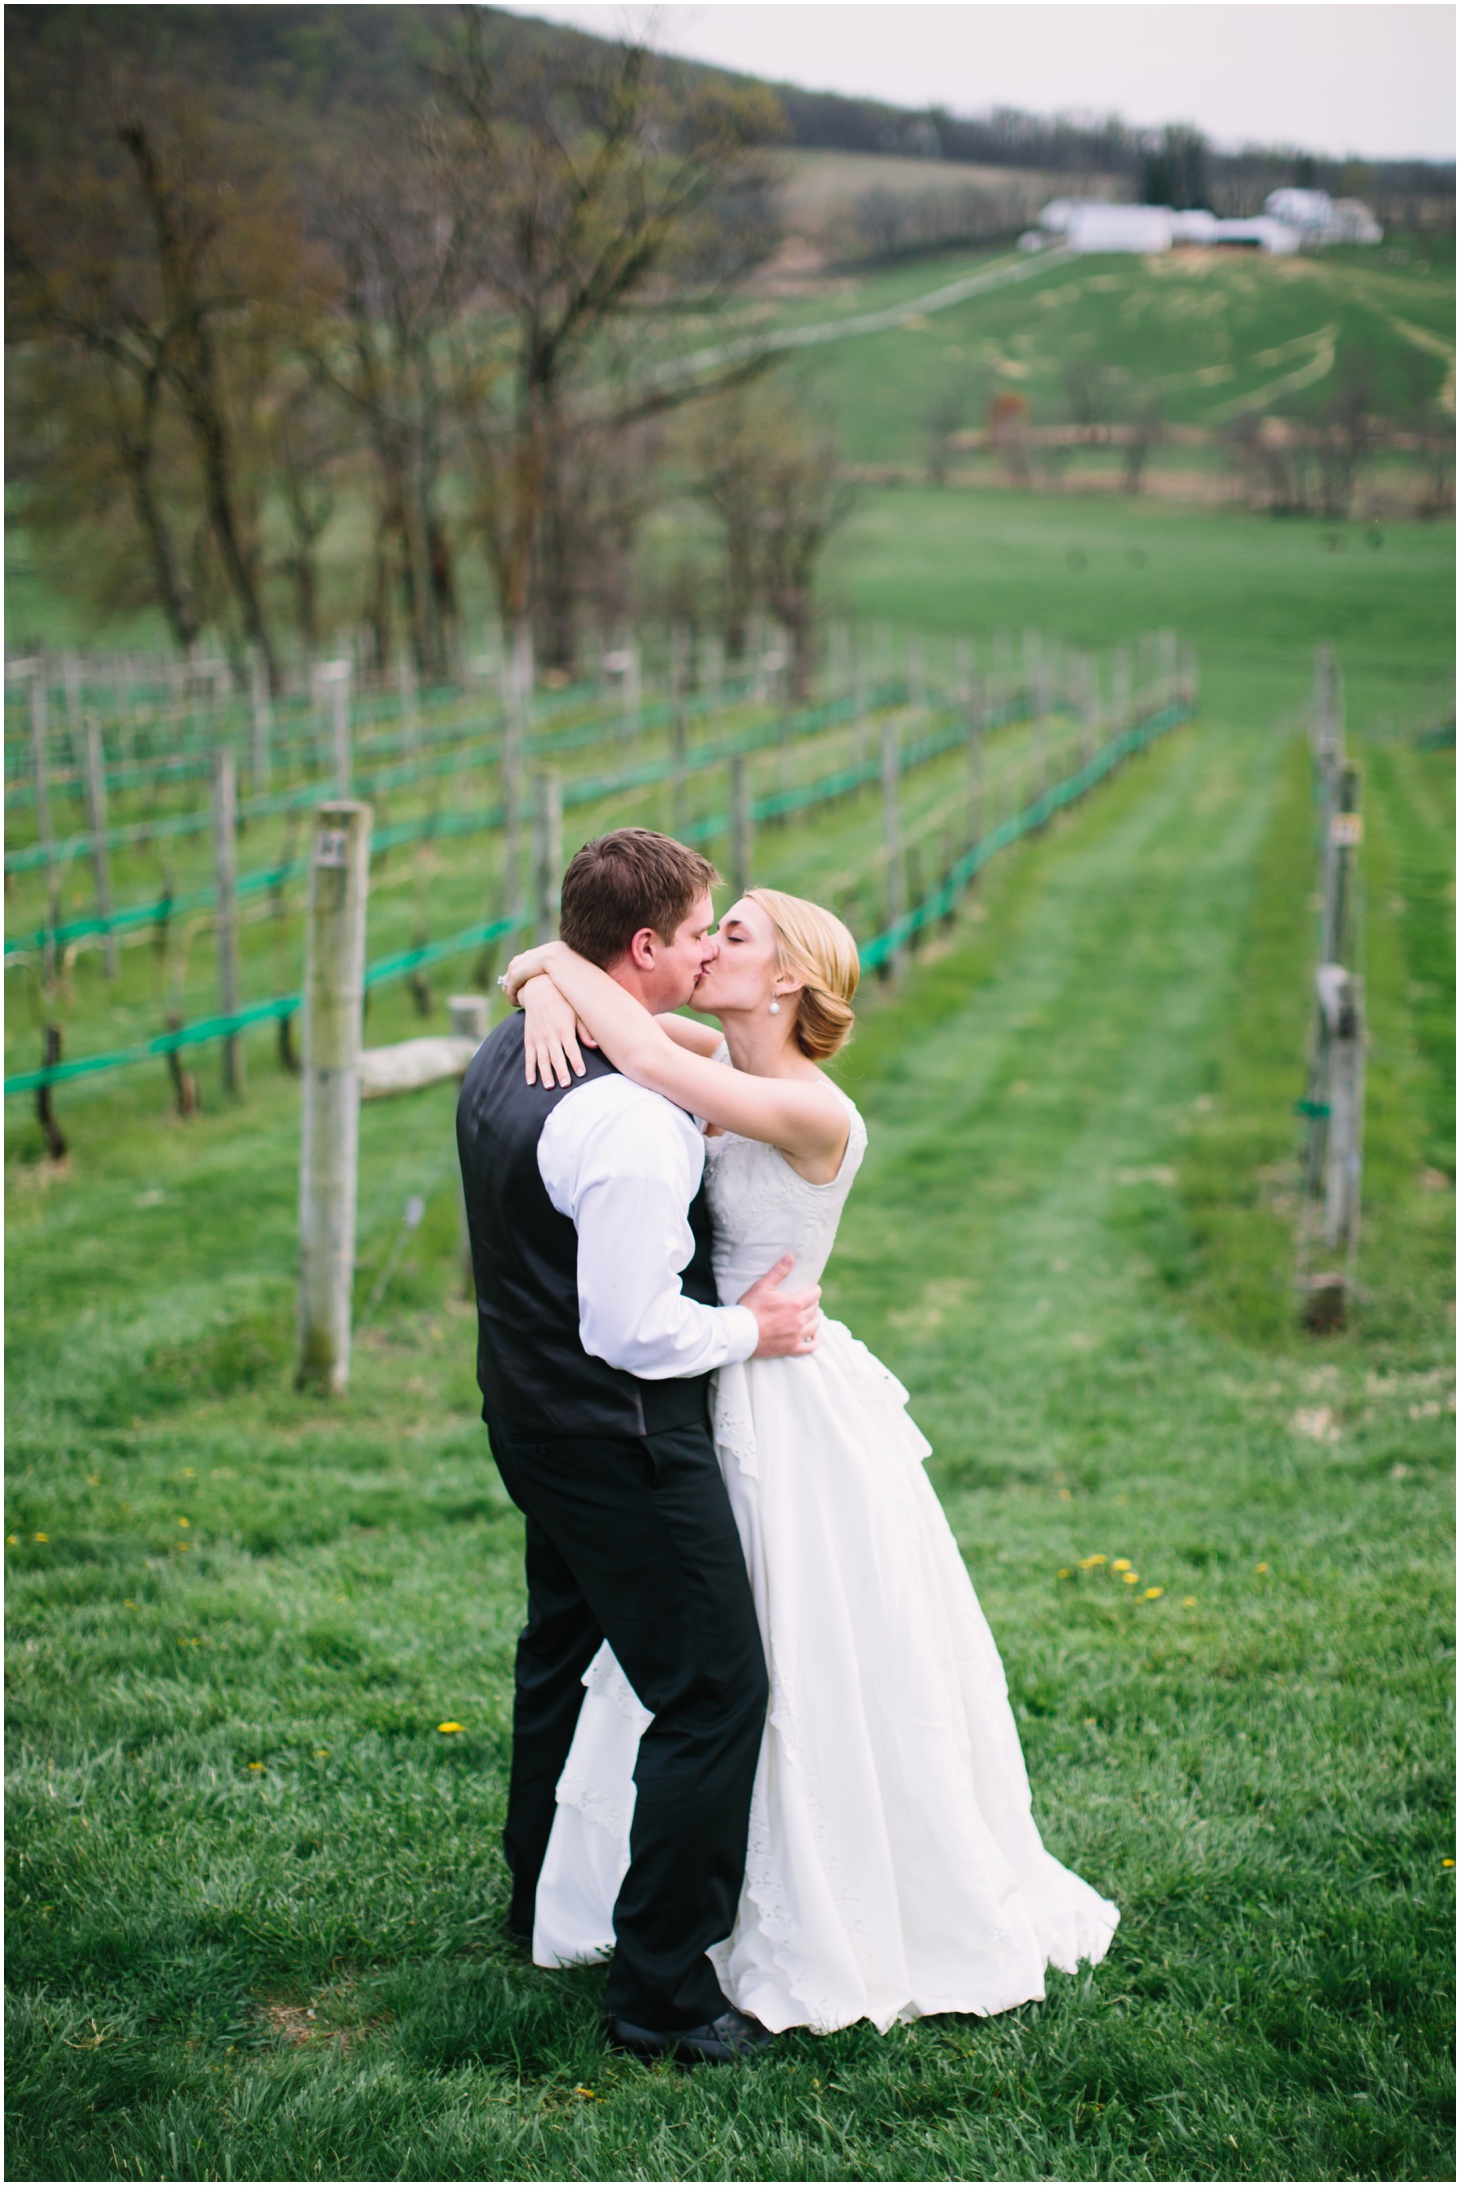 Brent & Lydia, Vintage Inspired Virginia Winery Wedding at Hillsborough Vineyard by Sarah Bradshaw Photography